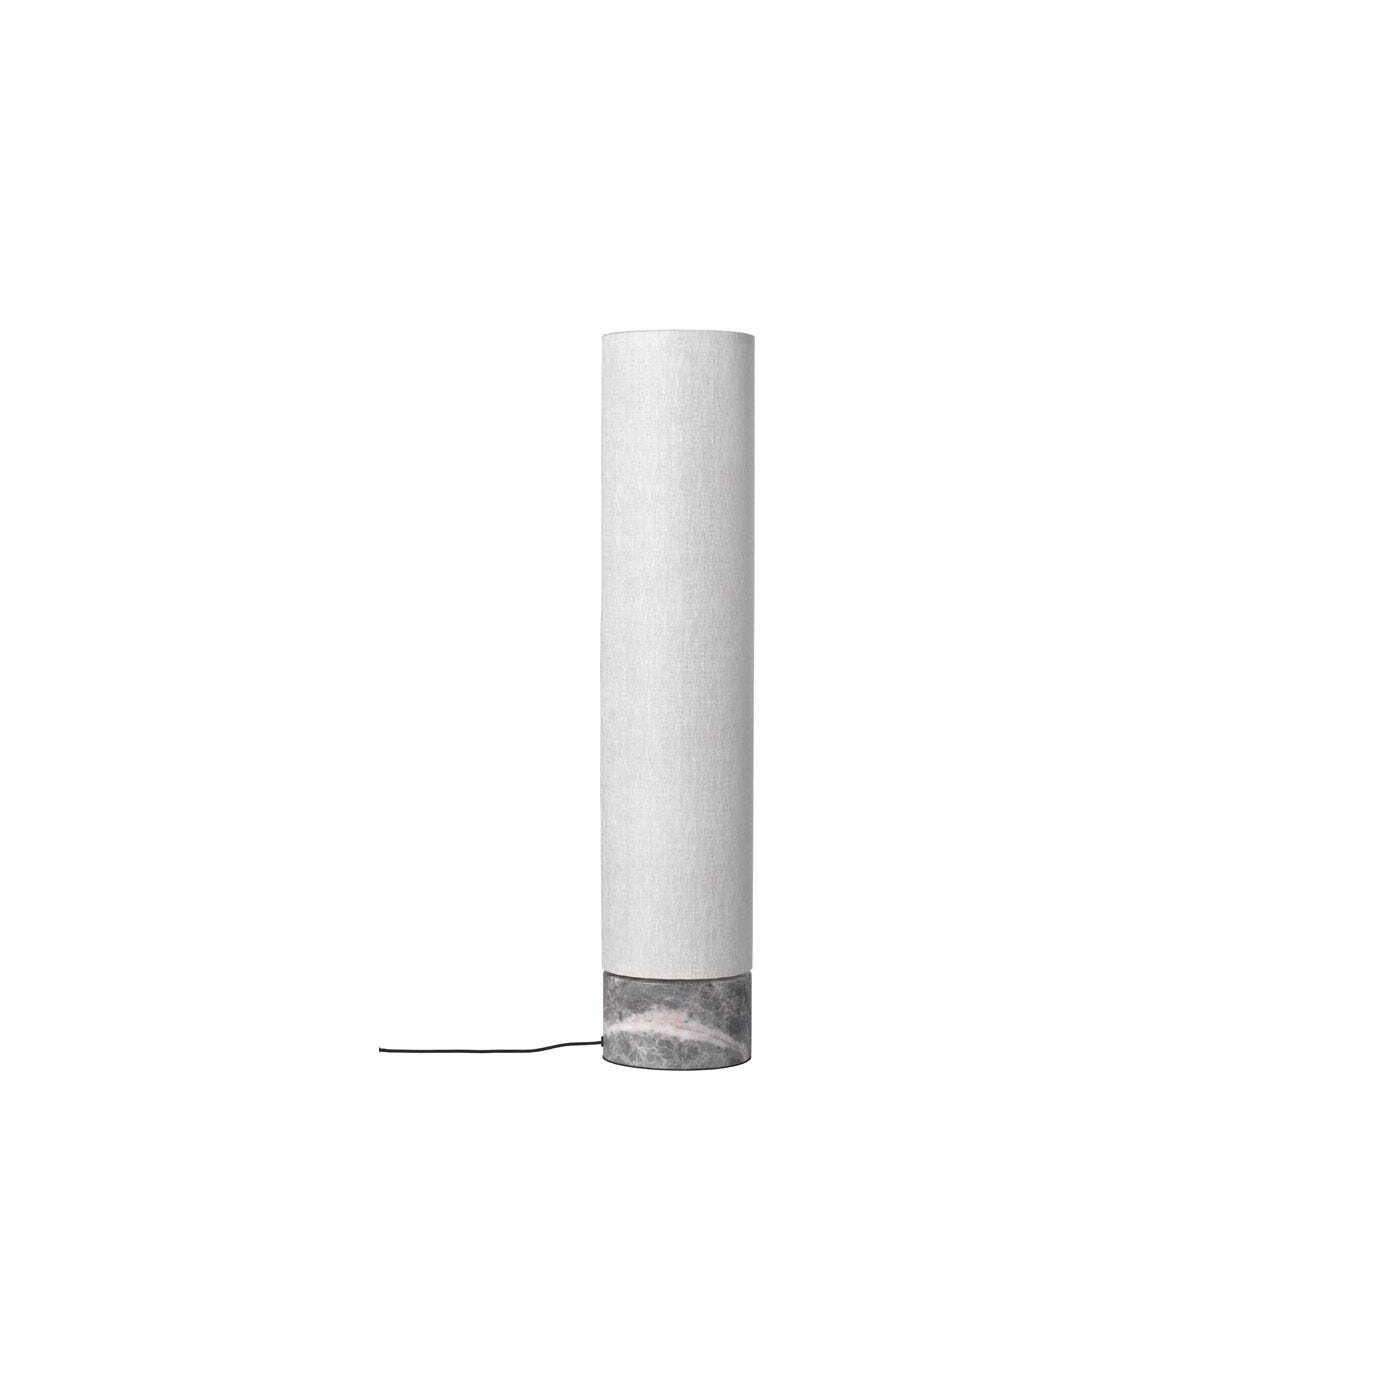 Gubi Unbound Floor Lamp White Large - image 1